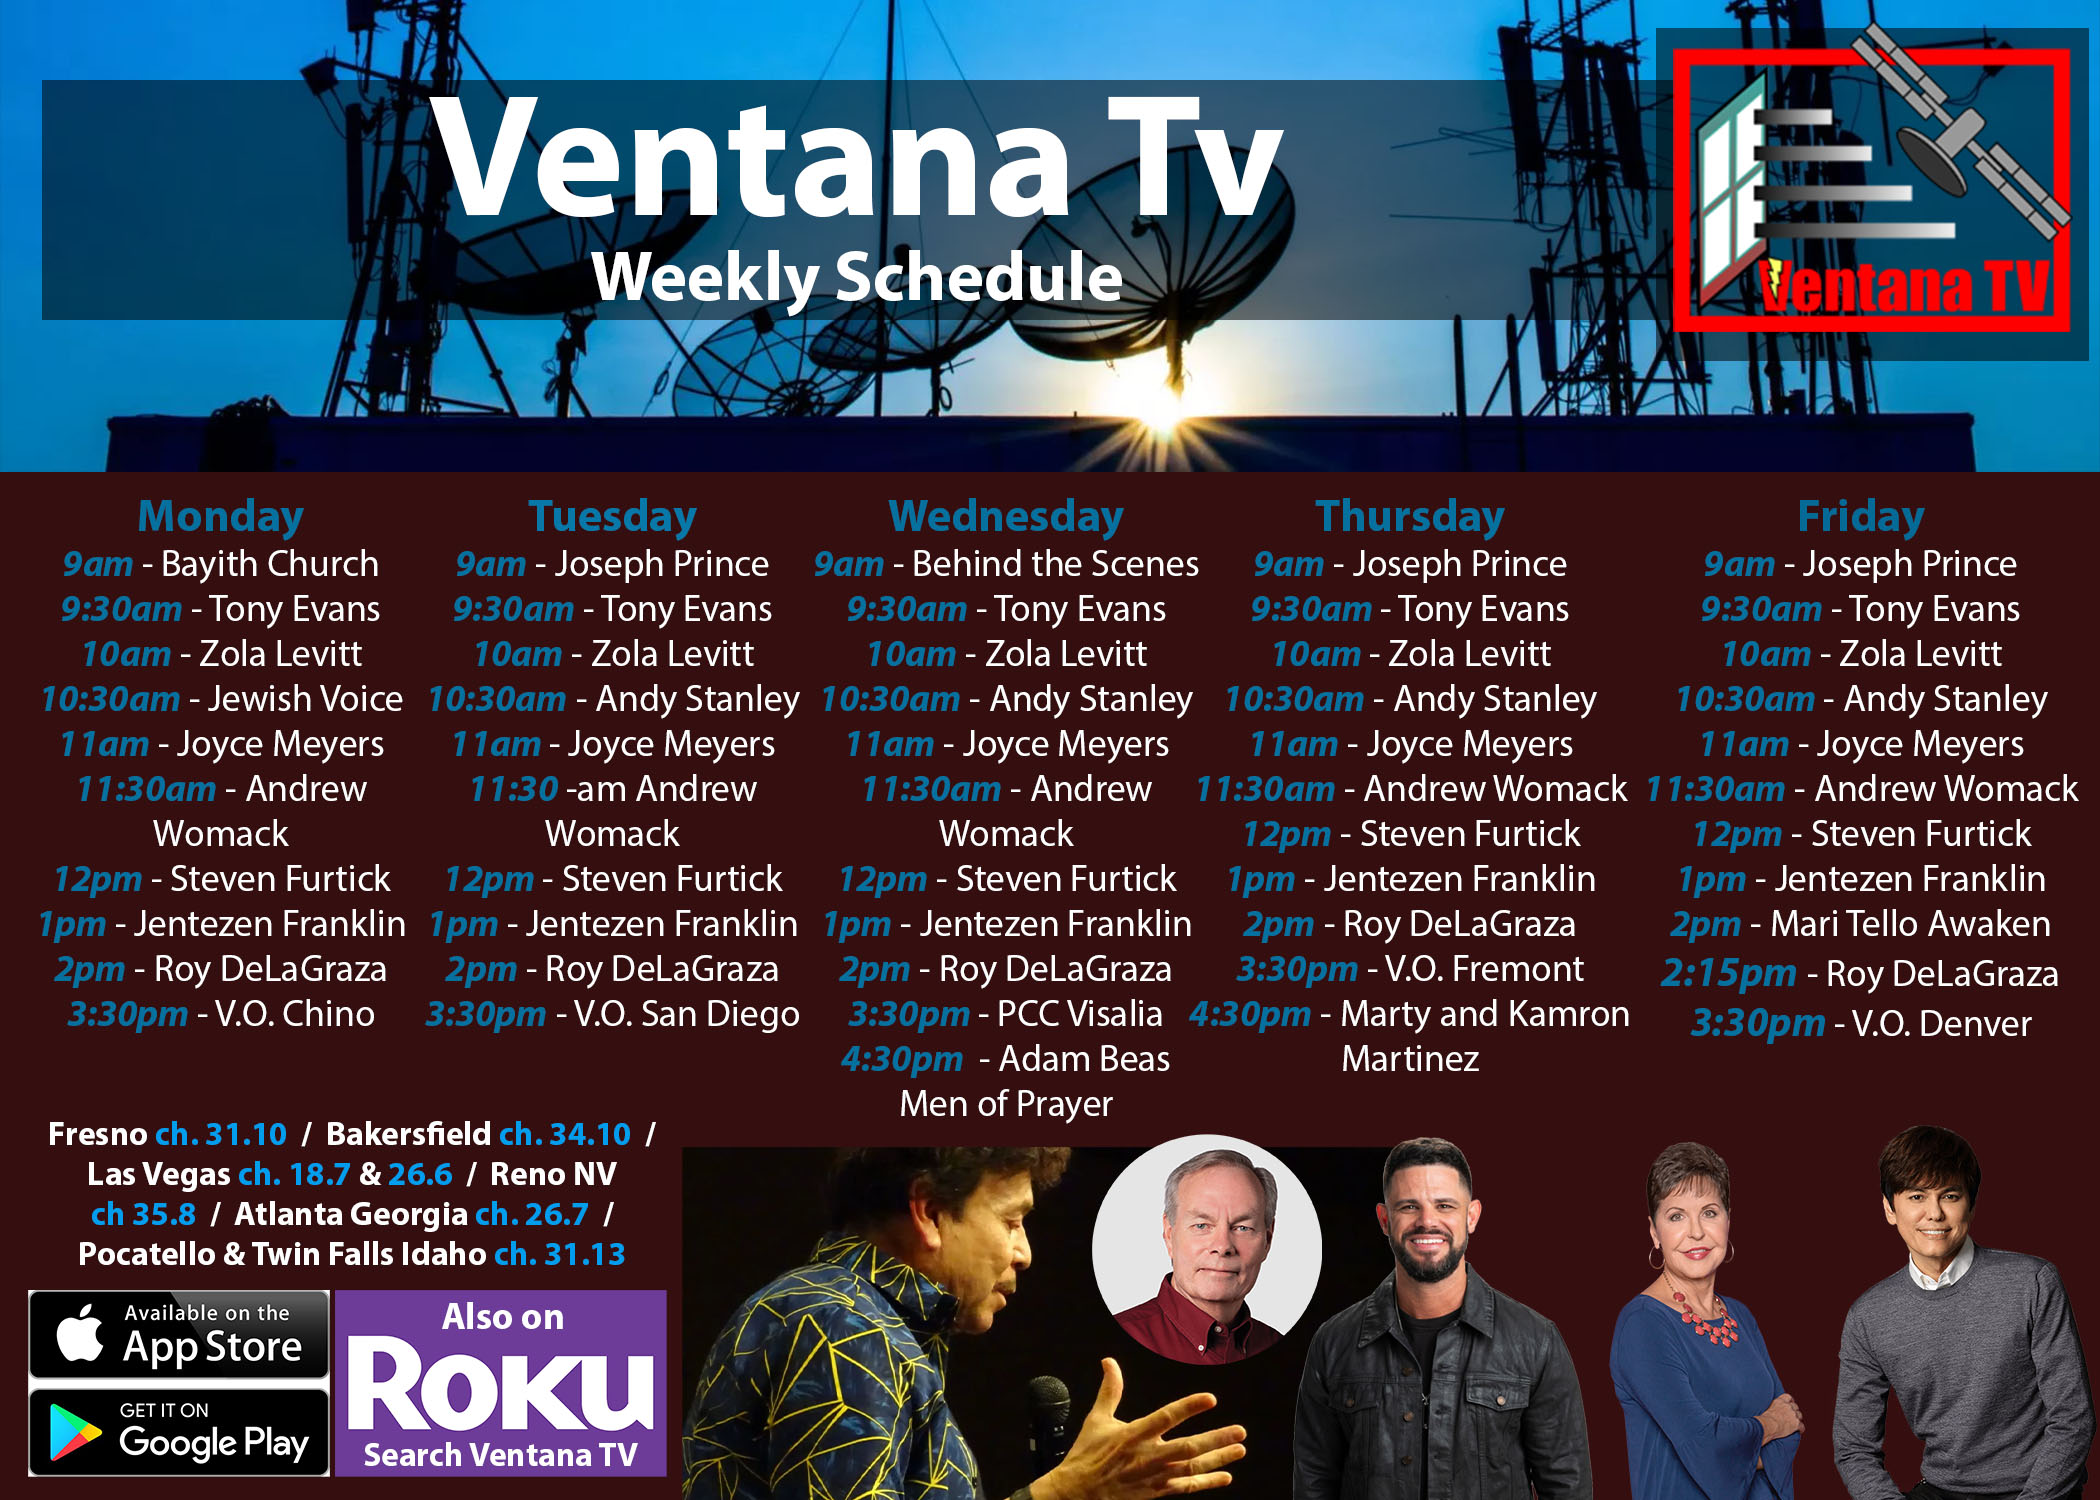 The Schedule for VentanaTV